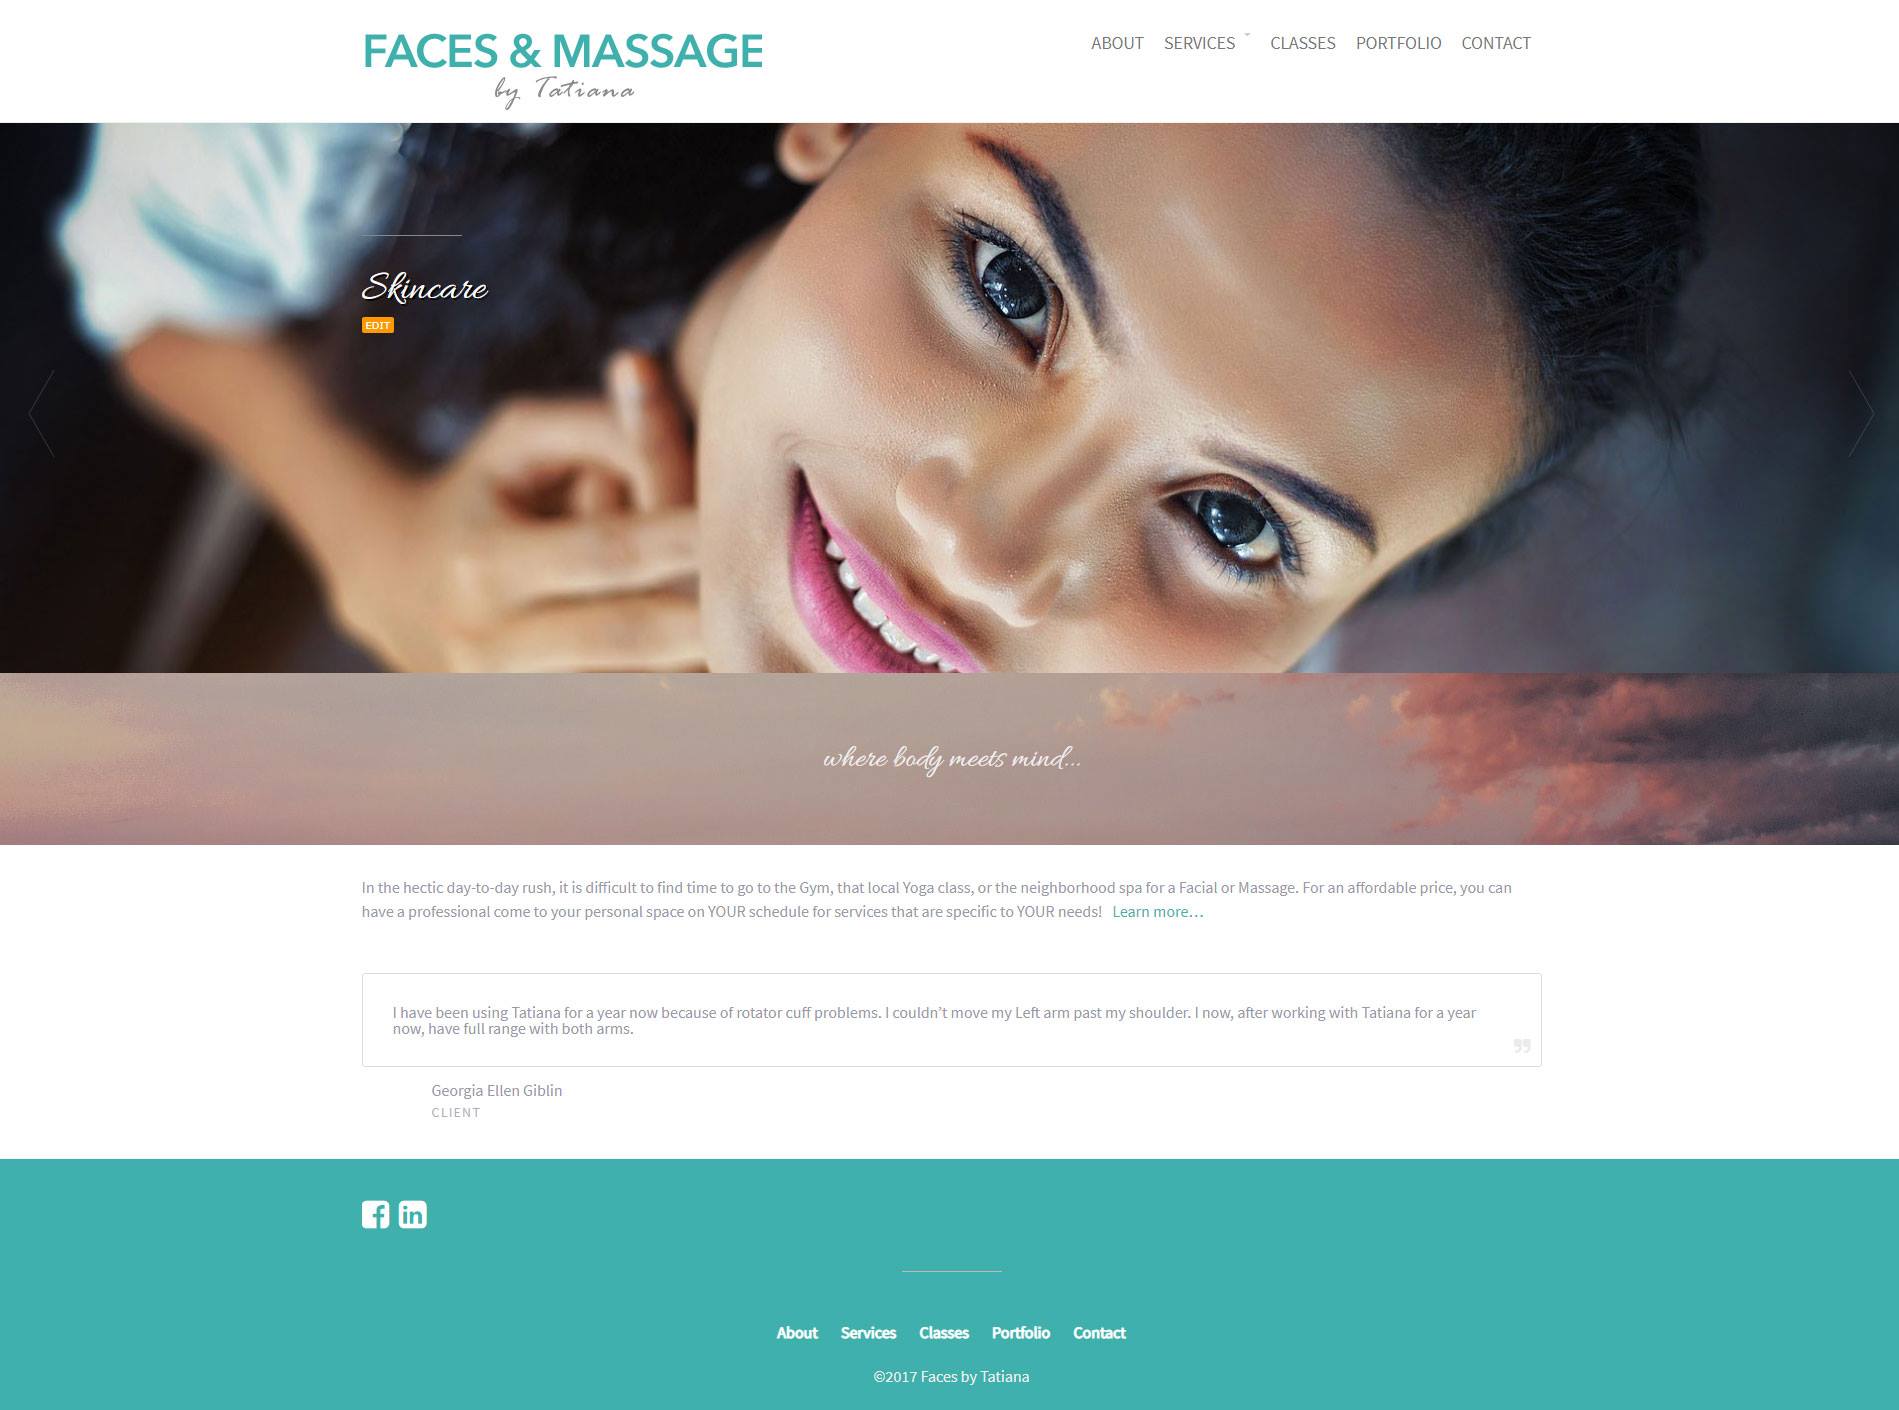 Faces & Massage by Tatiana - Wordpress